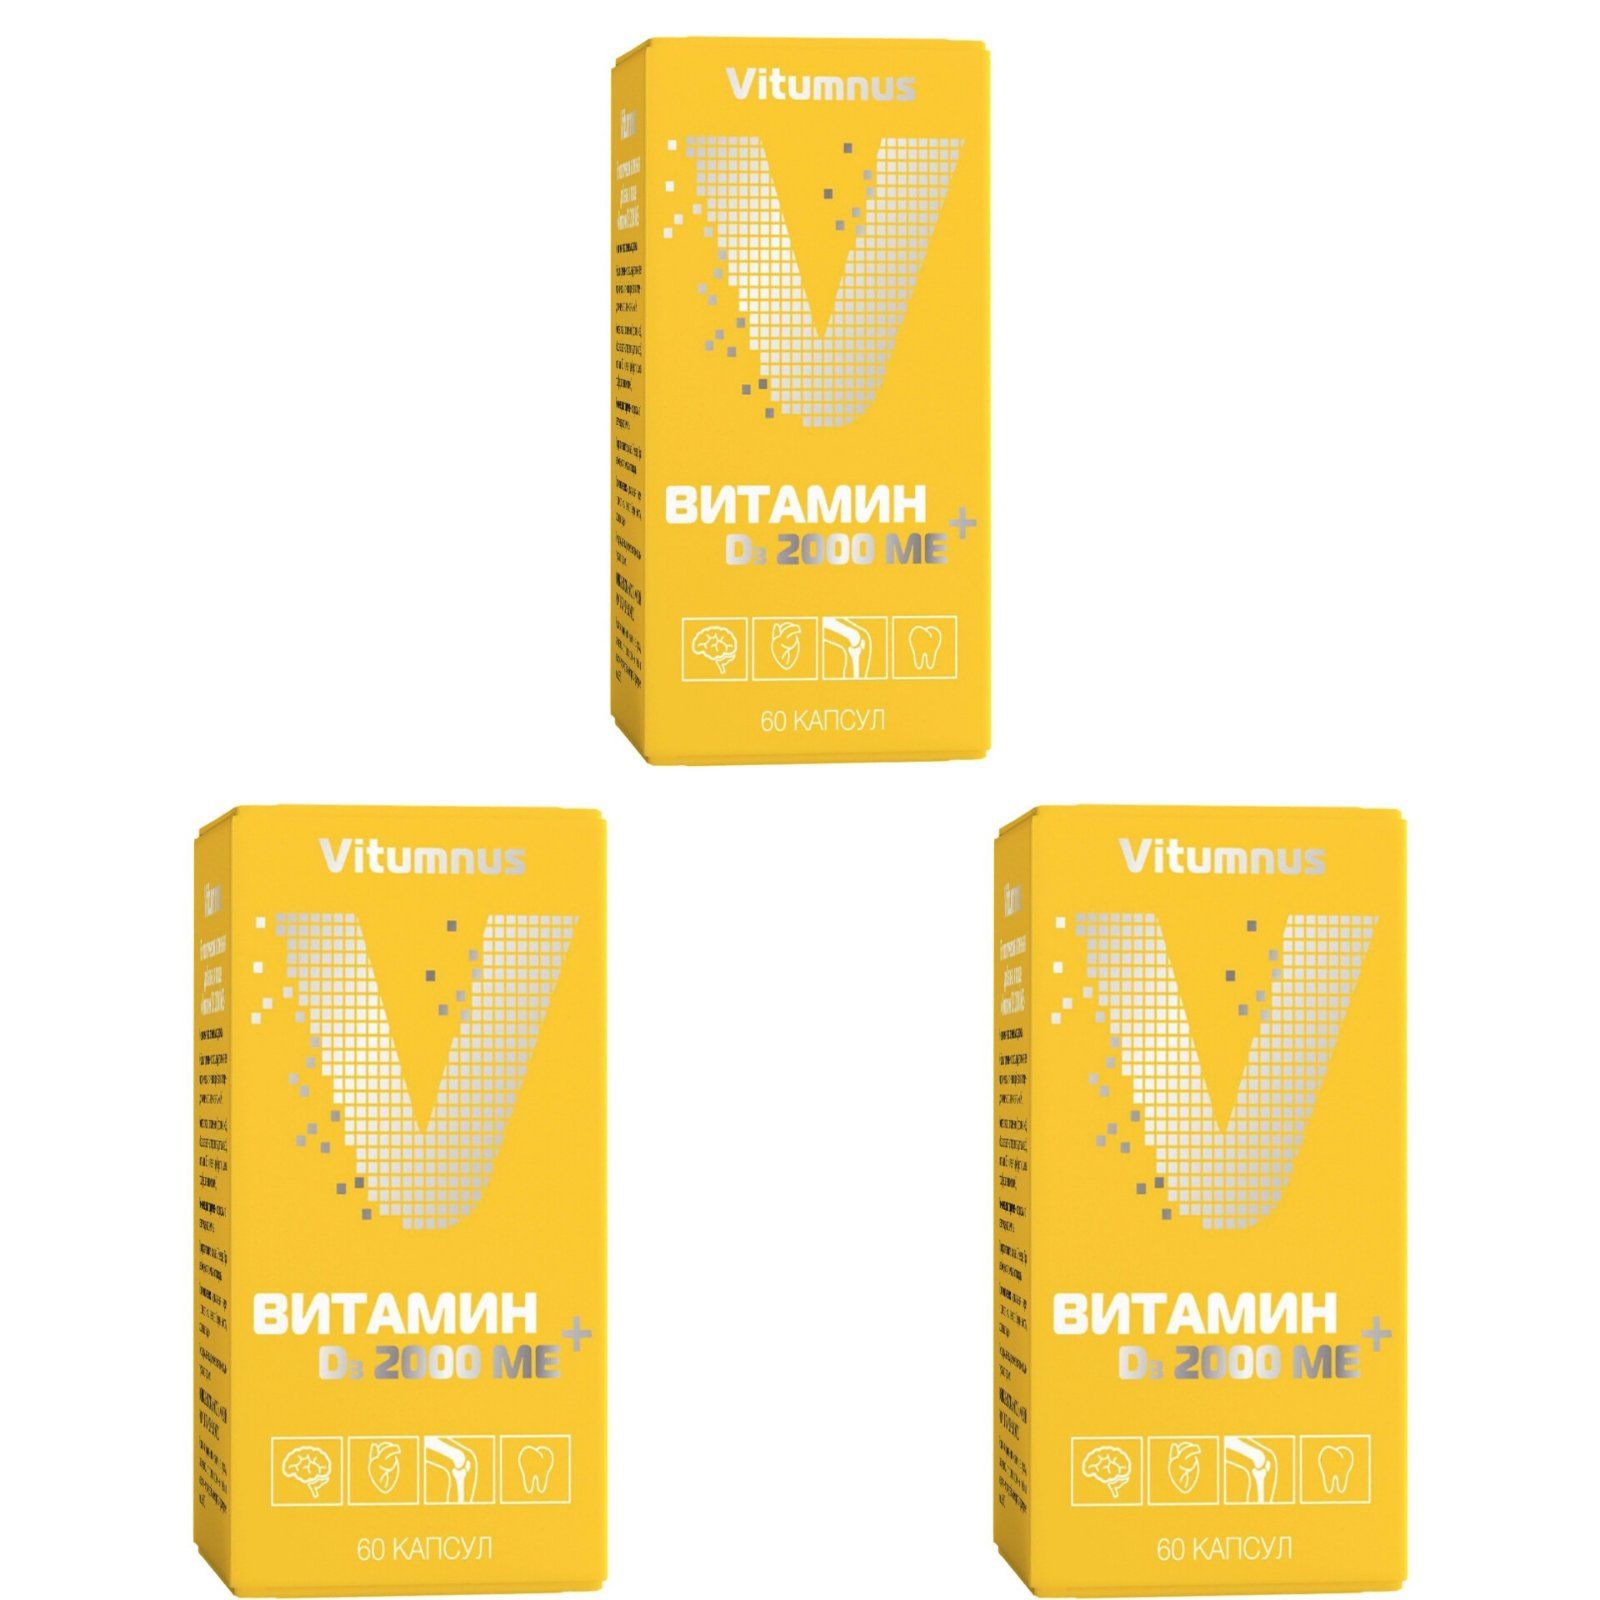 Vitumnus д3 витамин. Витамин д3 Vitumnus. Vitumnus витамин д3 2000ме. Vitumnus витамины d3 2000. Витамин д3 2000 ме капс 120 шт Vitumnus капсулы.